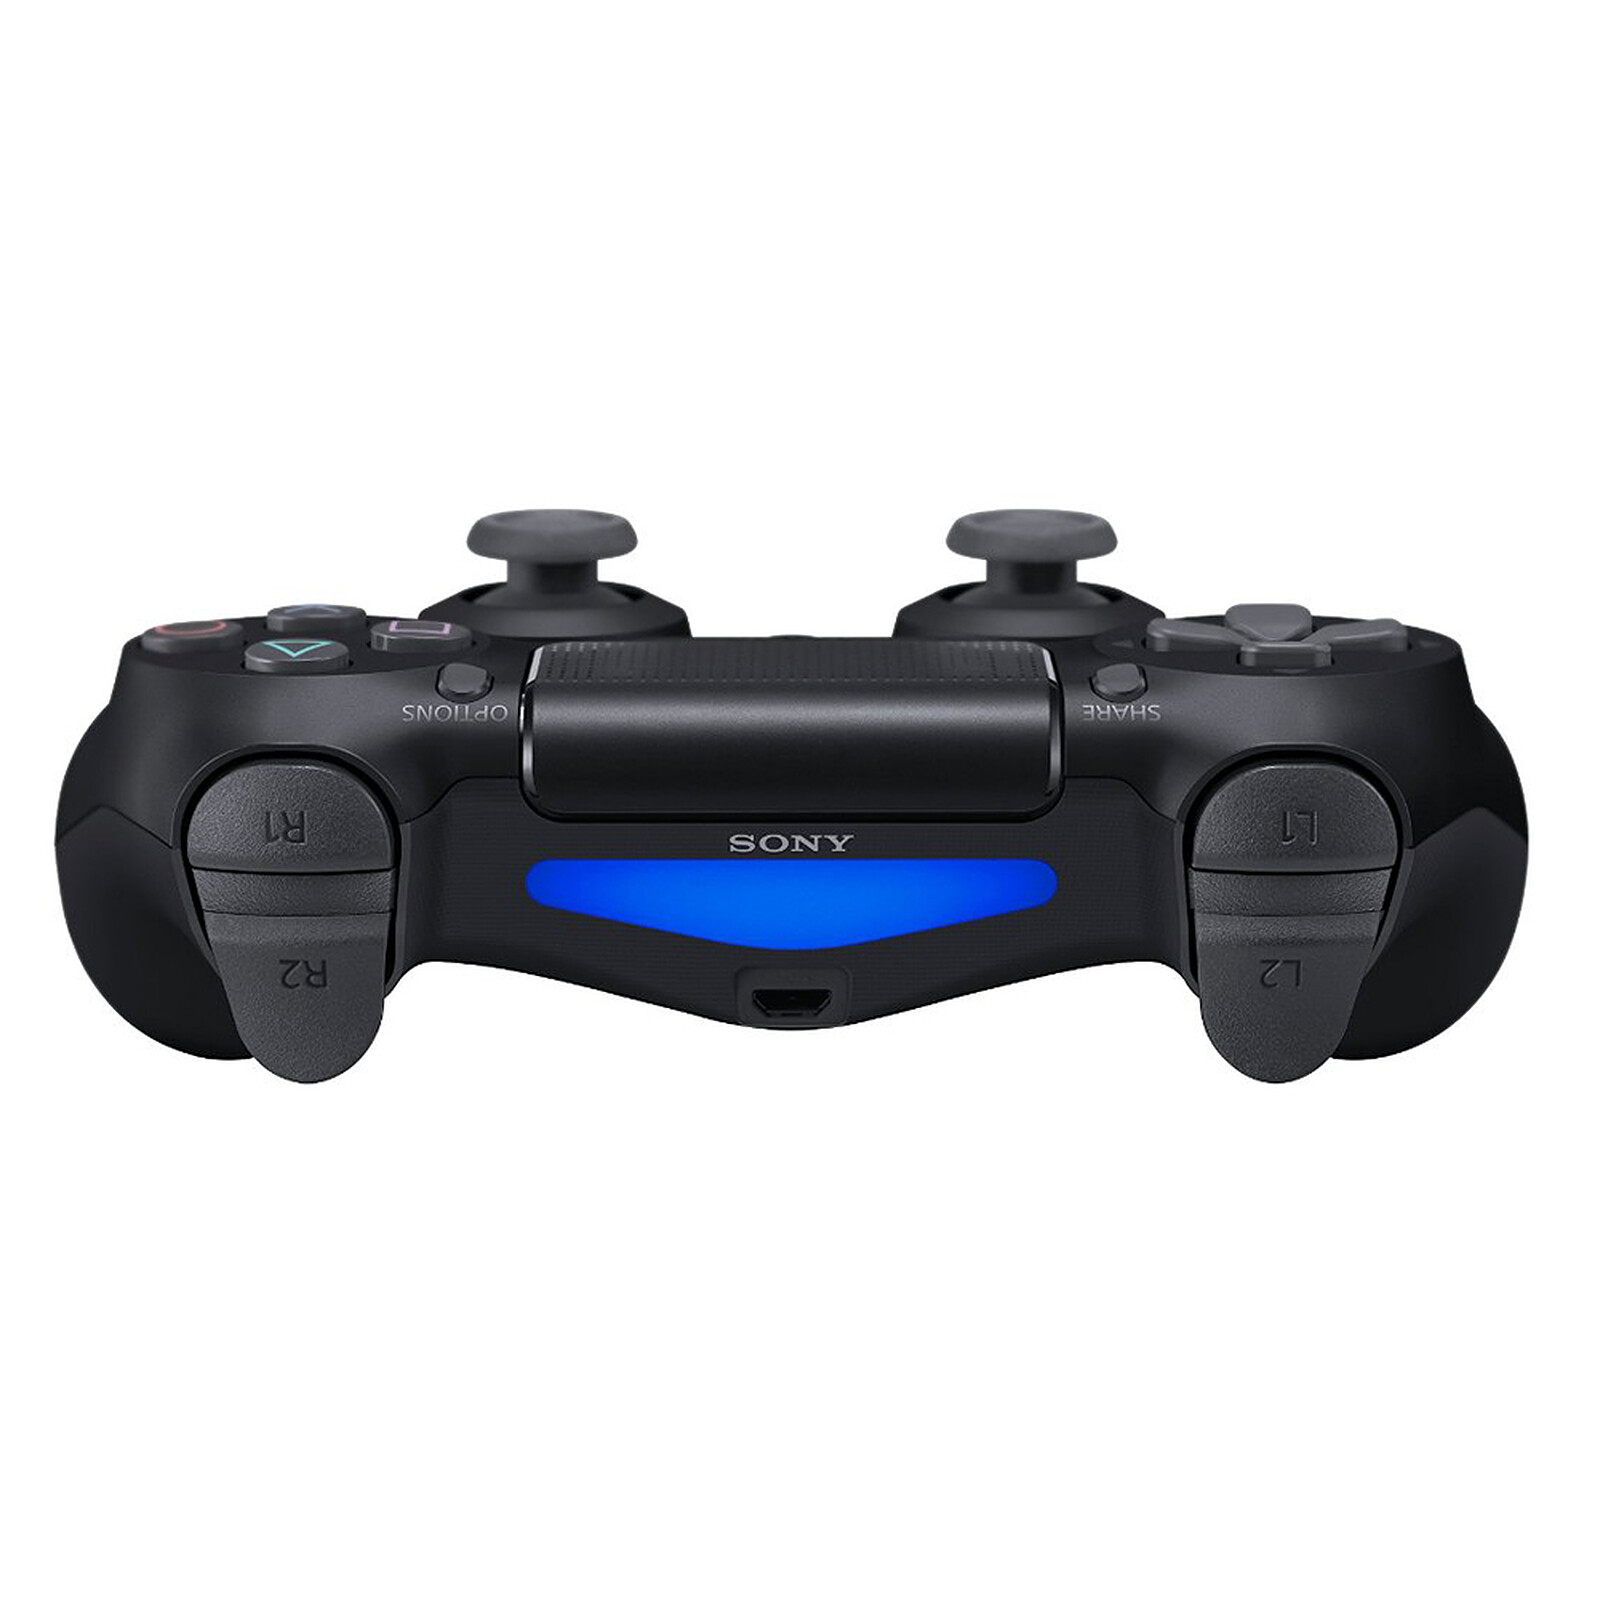 Sony DualShock 4 v2 (noire) + PlayStation 4 DualShock USB Adapter